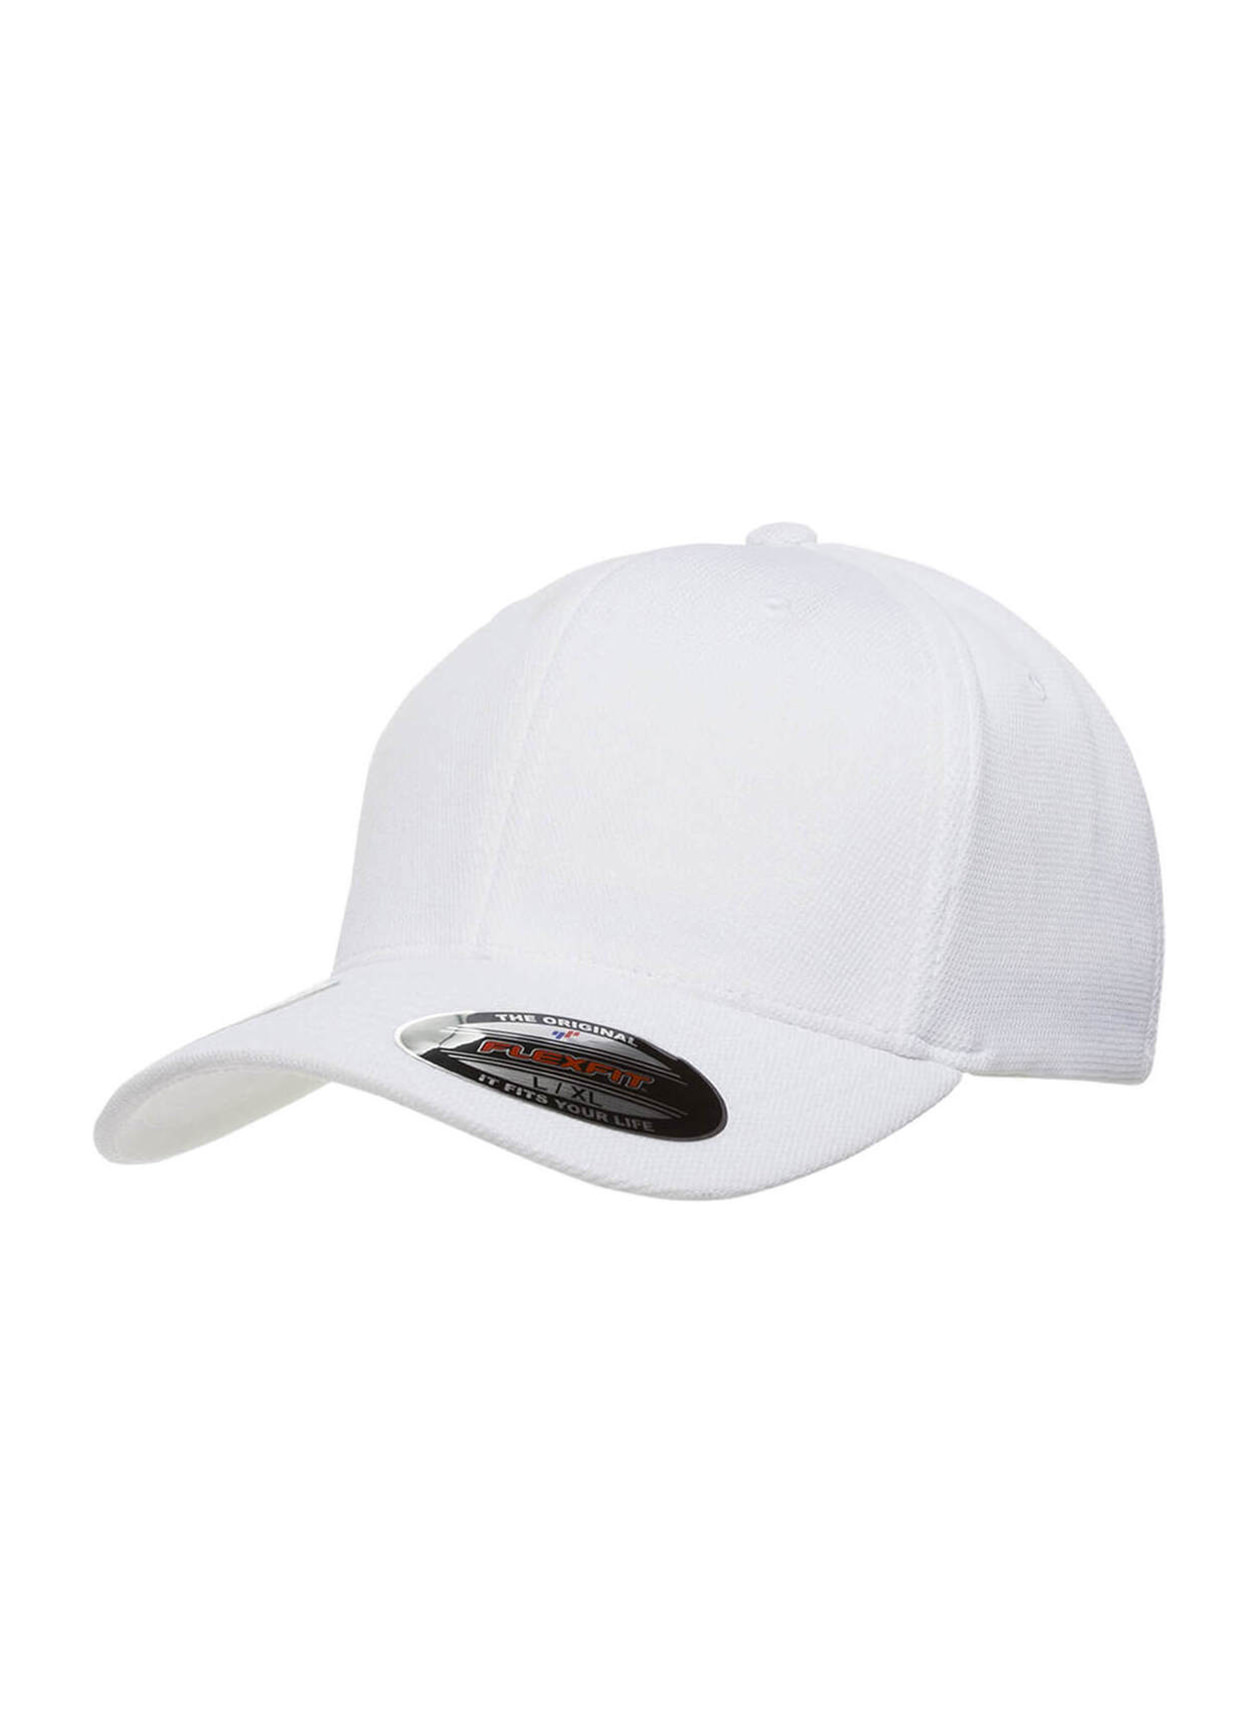 White Flexfit Cool & Dry Sport Hat